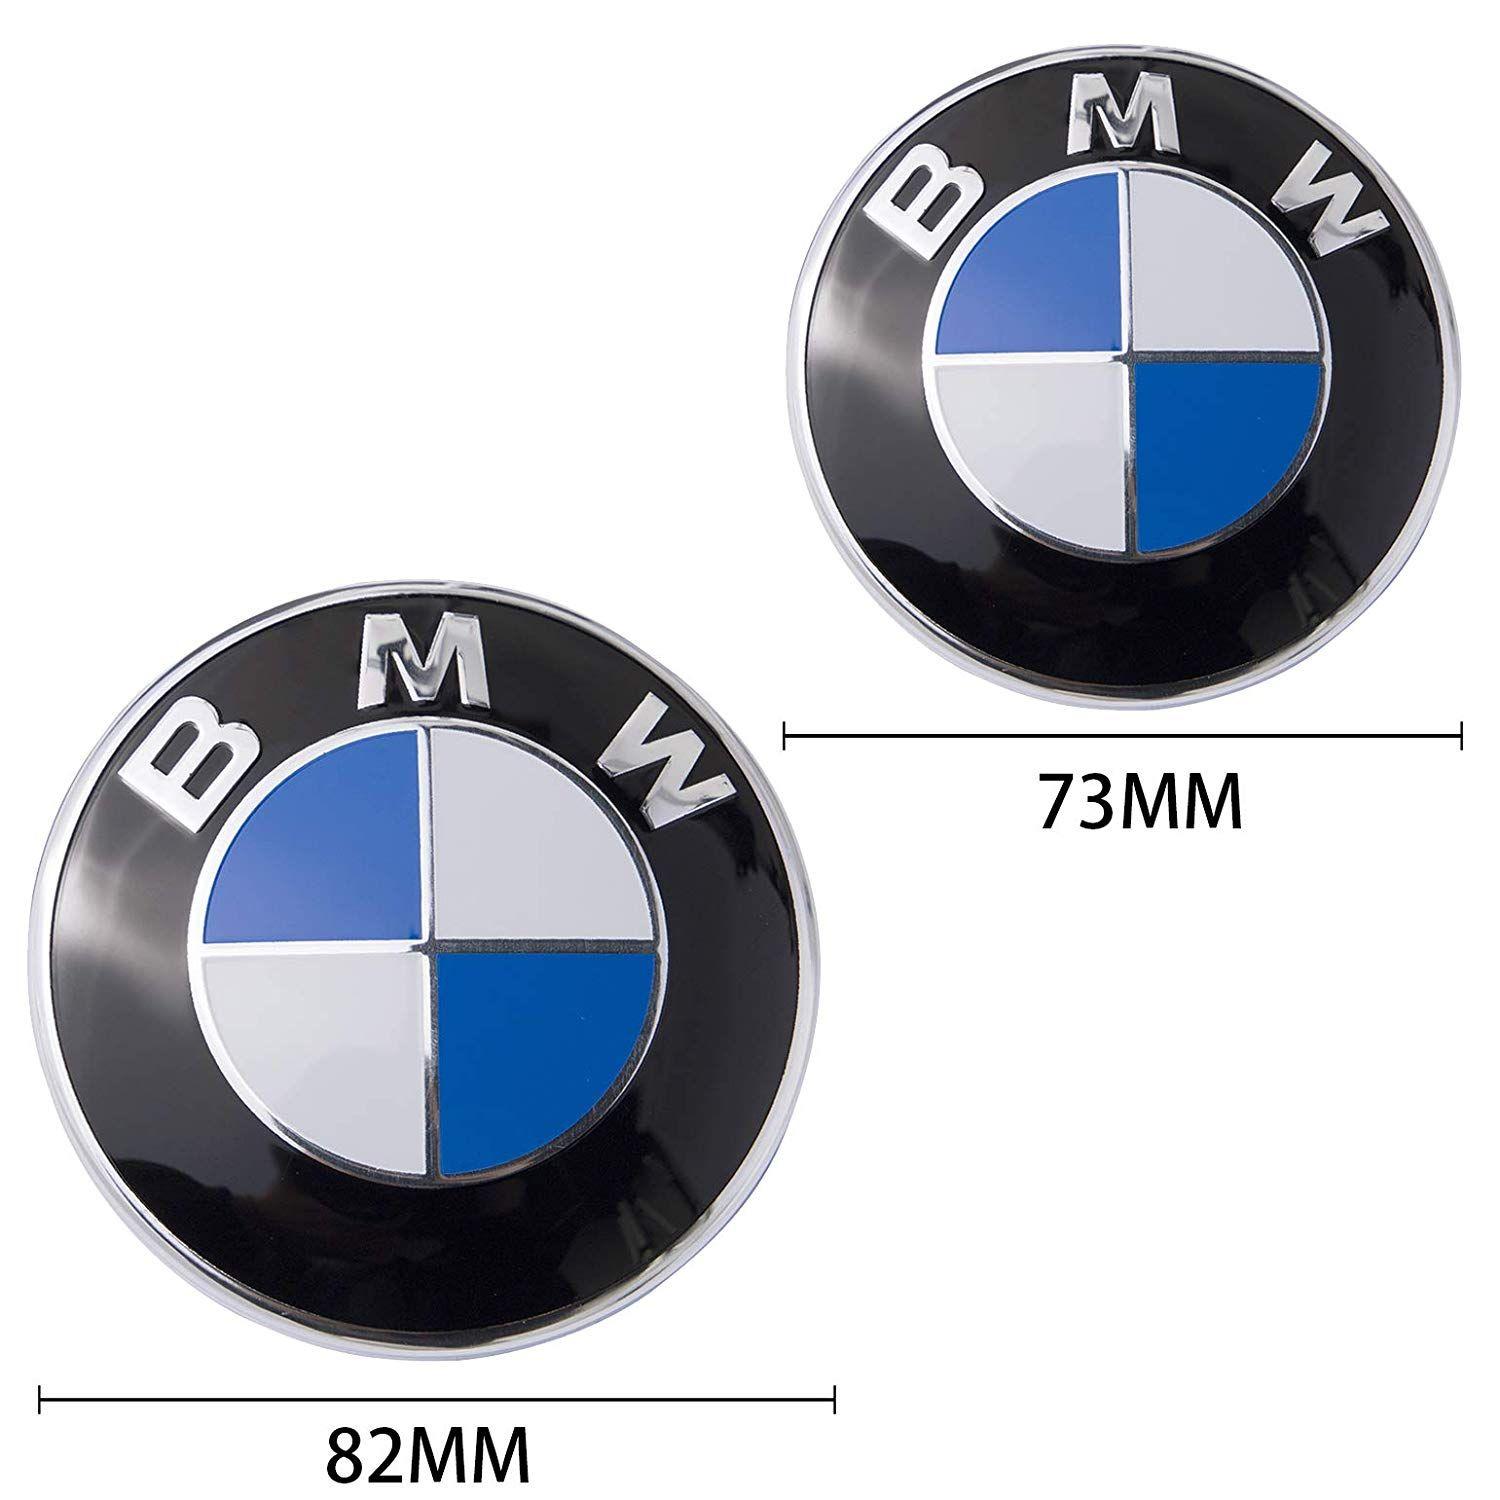 E30 Logo - BMW Logo, BMW Emblem Replacement for BMW Hood or Trunk E30 E36 E34 E60 E65  E38 X3 X5 X6, 3-Series, 5-Series, 6-Series, 7-Series etc (82MM & 73MM)